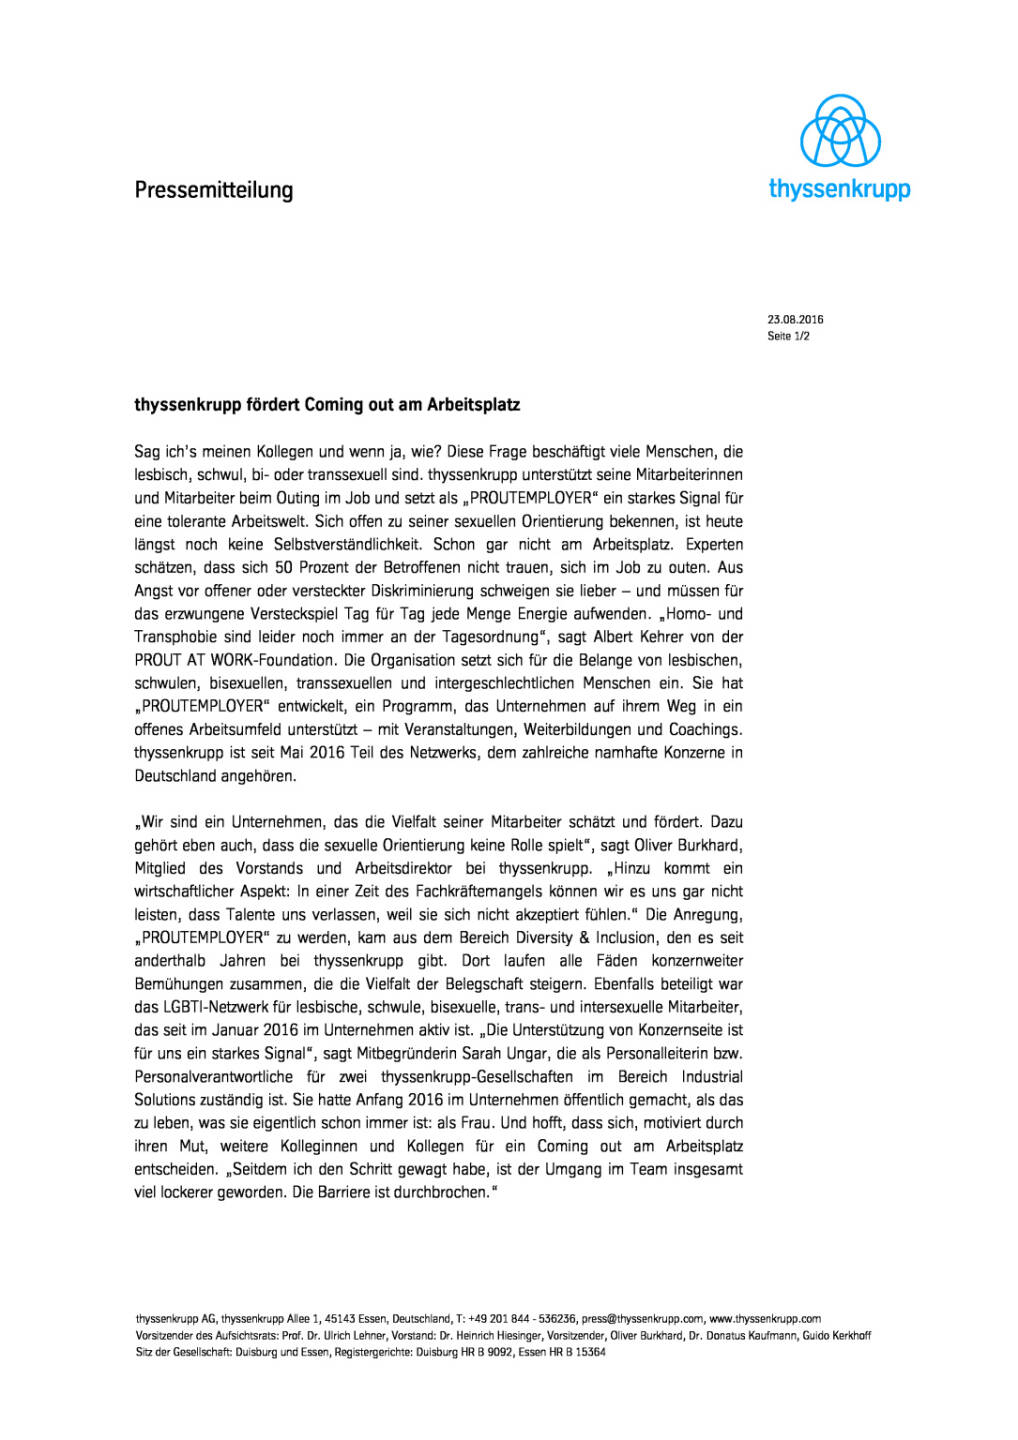 thyssenkrupp fördert Coming out am Arbeitsplatz, Seite 1/2, komplettes Dokument unter http://boerse-social.com/static/uploads/file_1654_thyssenkrupp_fördert_coming_out_am_arbeitsplatz.pdf